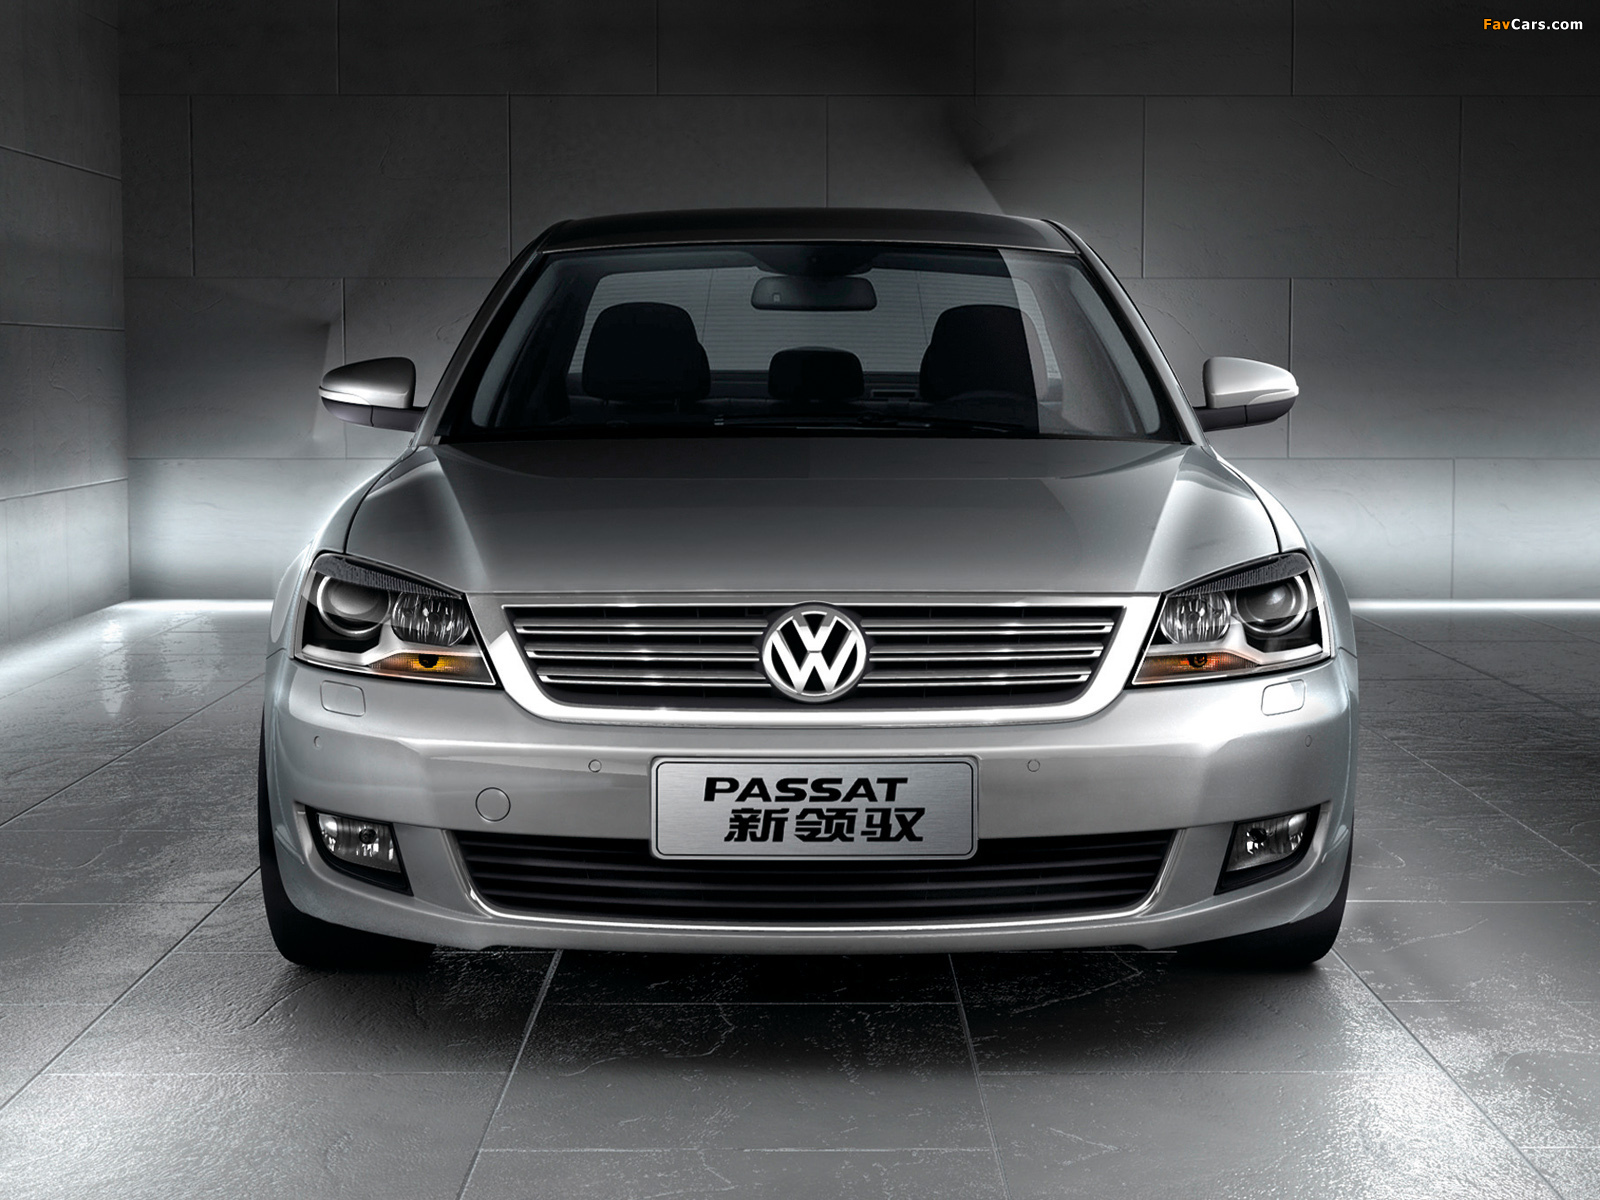 Volkswagen Passat Lingyu 2009 photos (1600 x 1200)